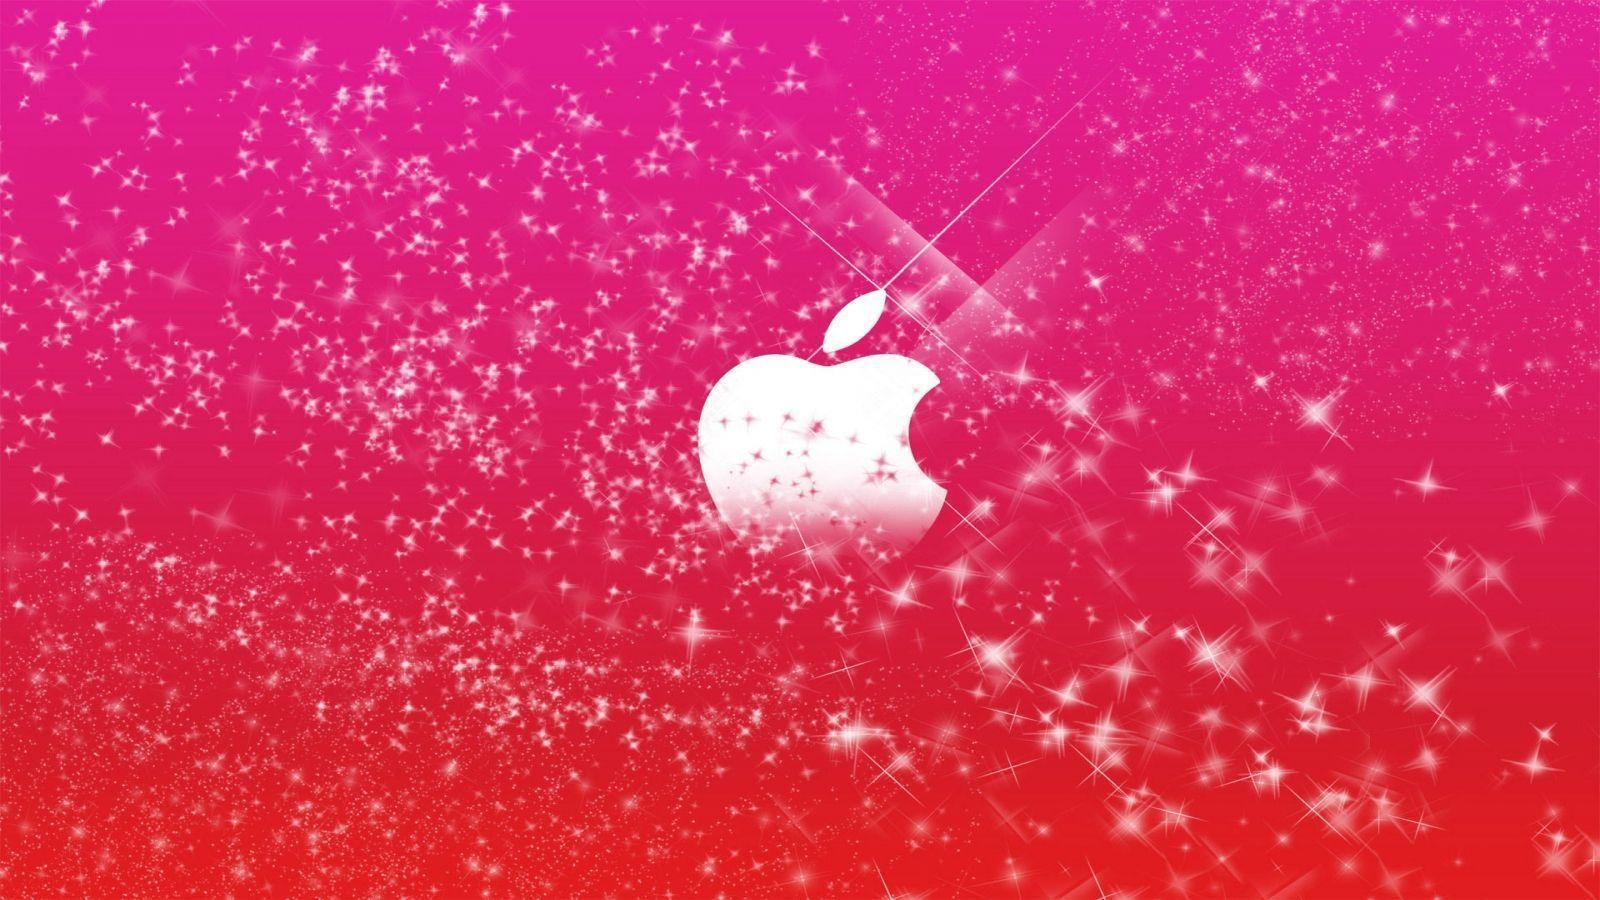 Background Pink Desktop Background Cute X Pixel Image 1600x900px